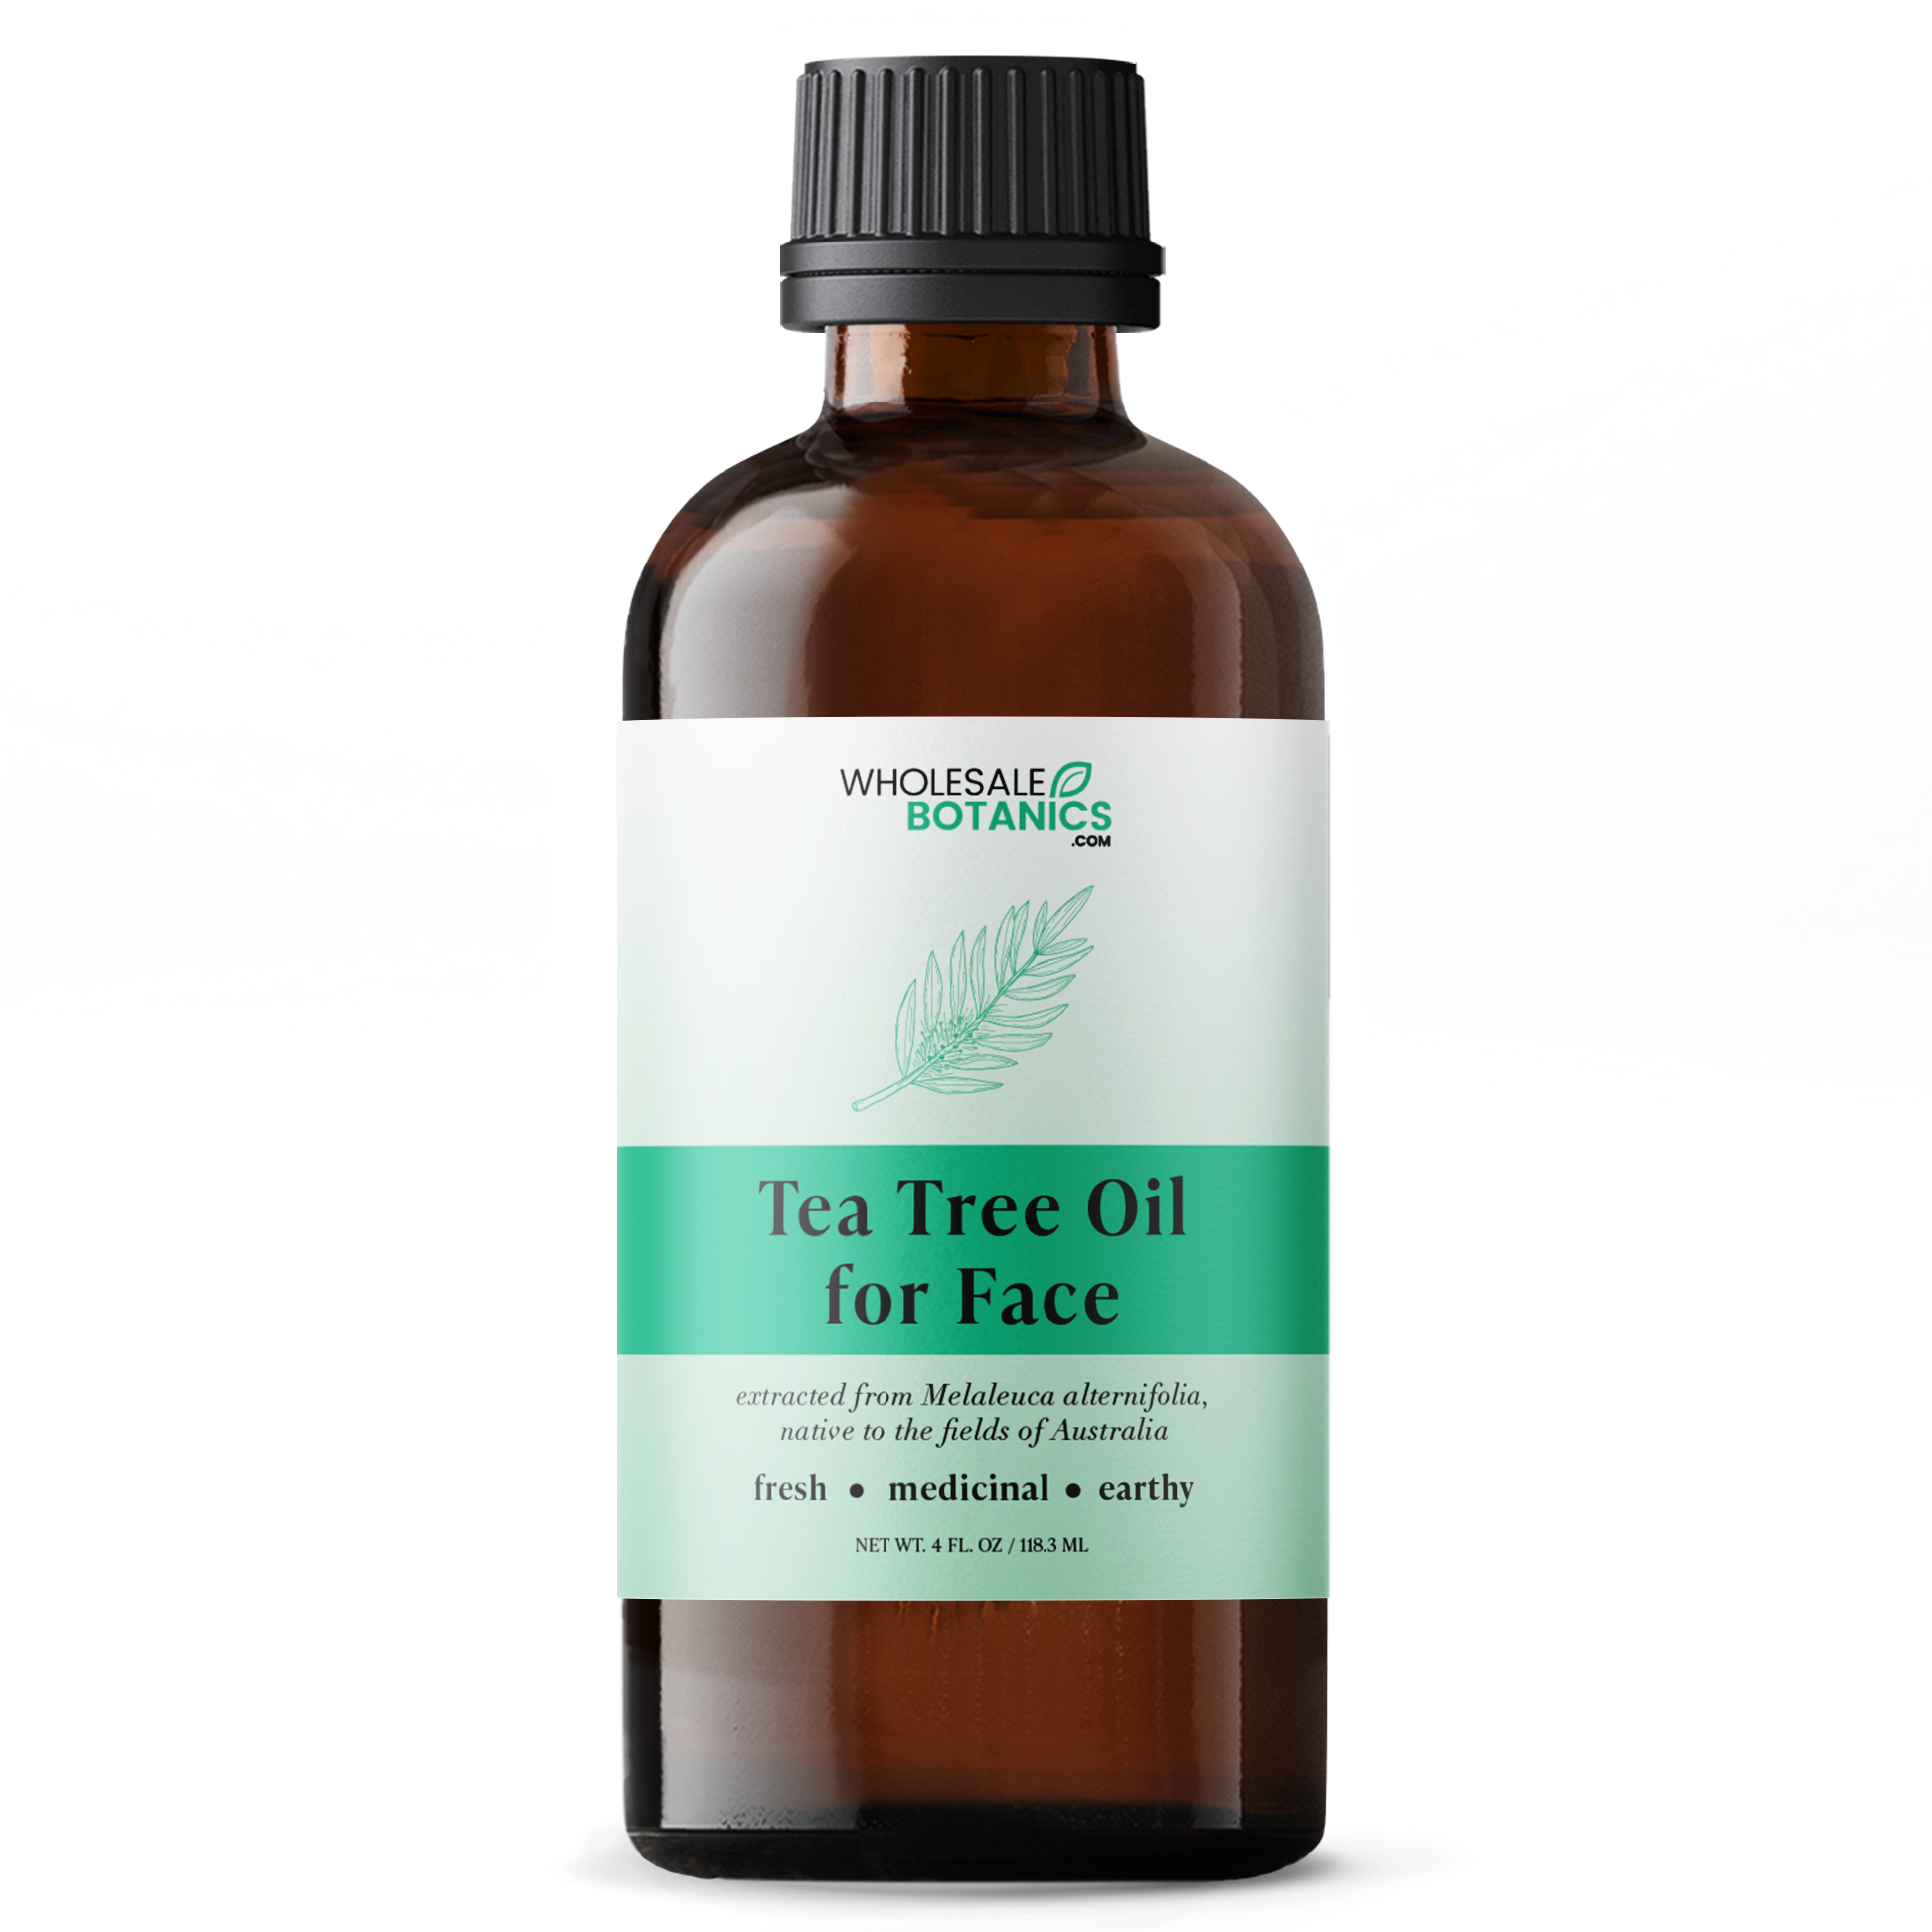 Tea Tree Oil for Face